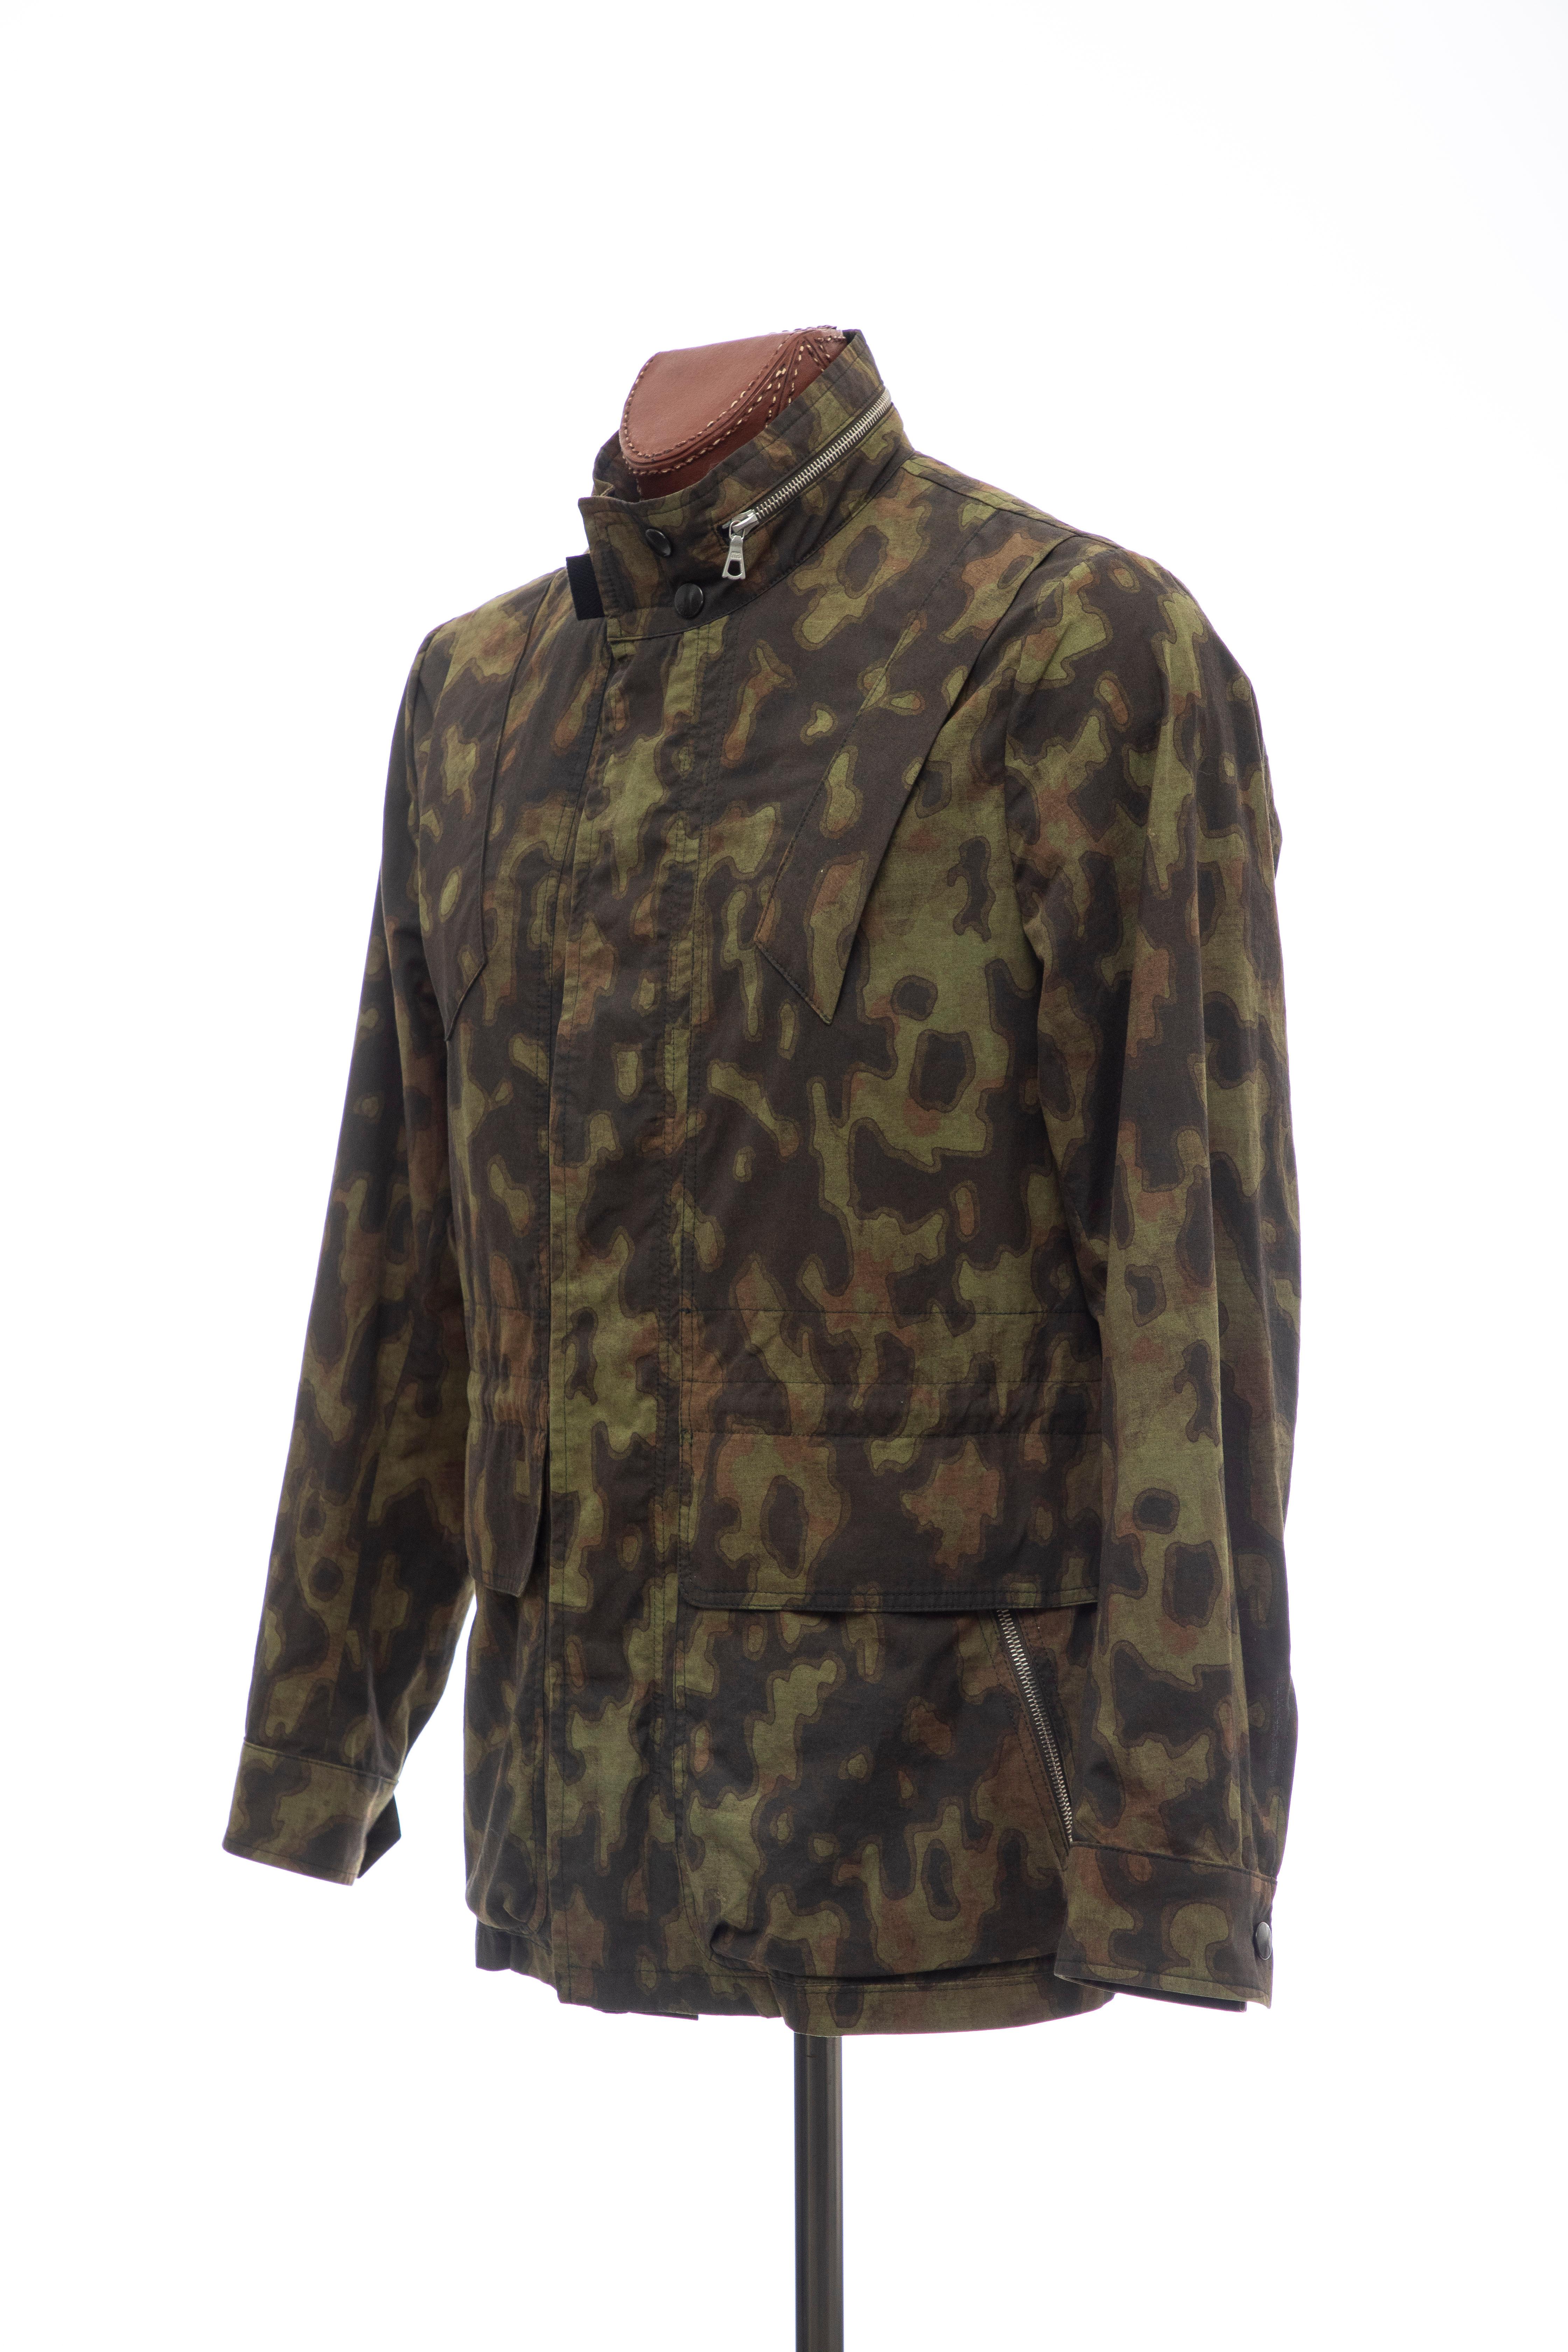 Dries Van Noten Men's Cotton Camouflage Jacket, Spring 2013 For Sale 3